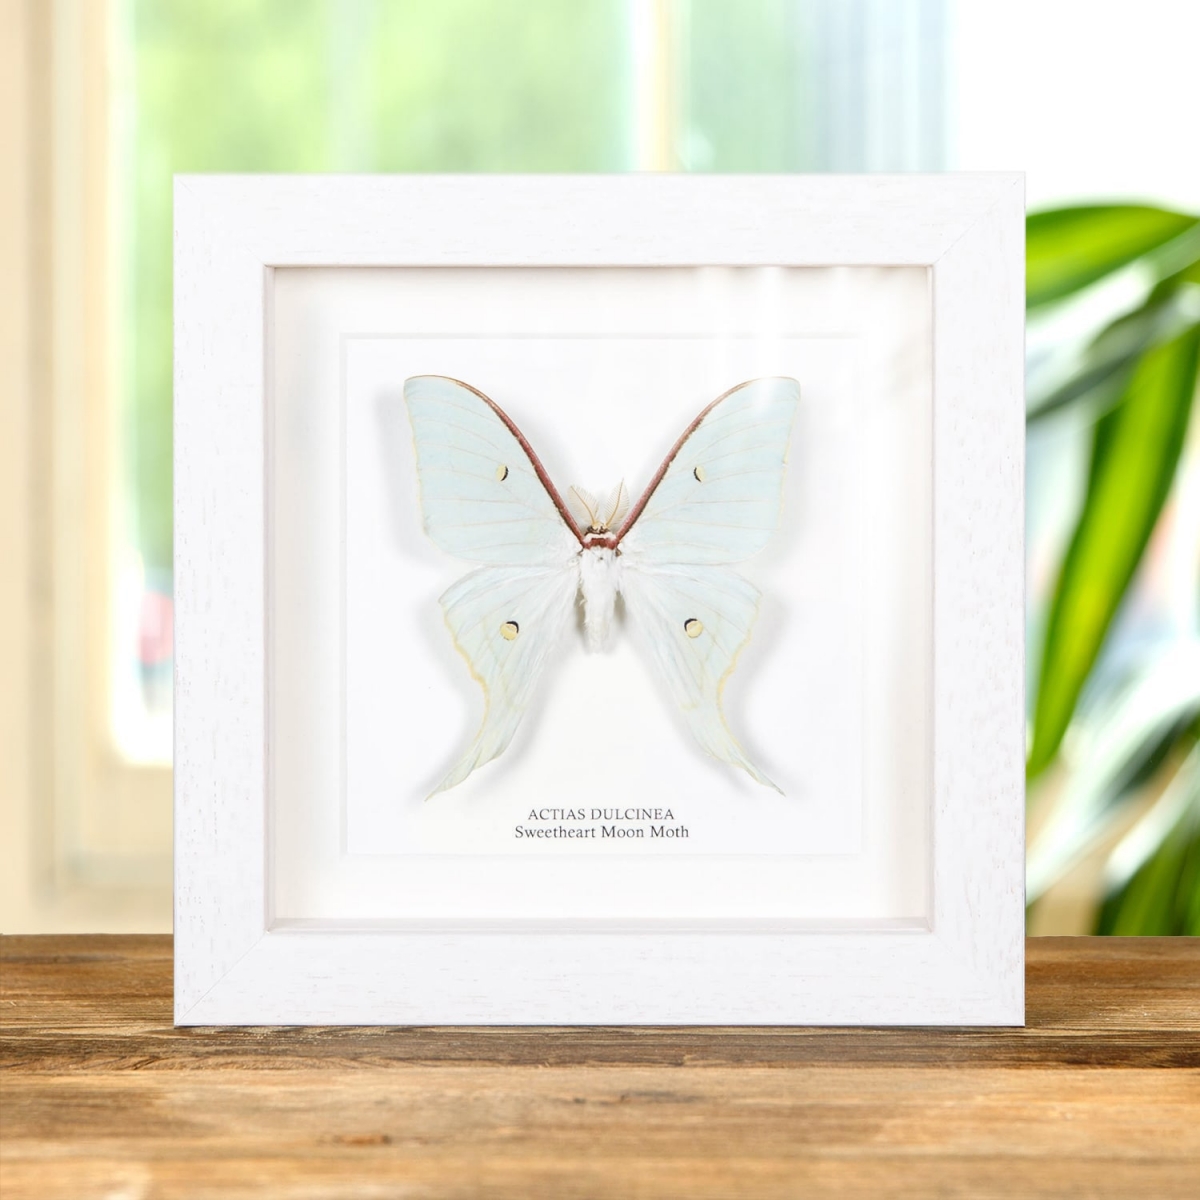 Male Sweetheart Moon Moth In Box Frame (Actias dulcinea)